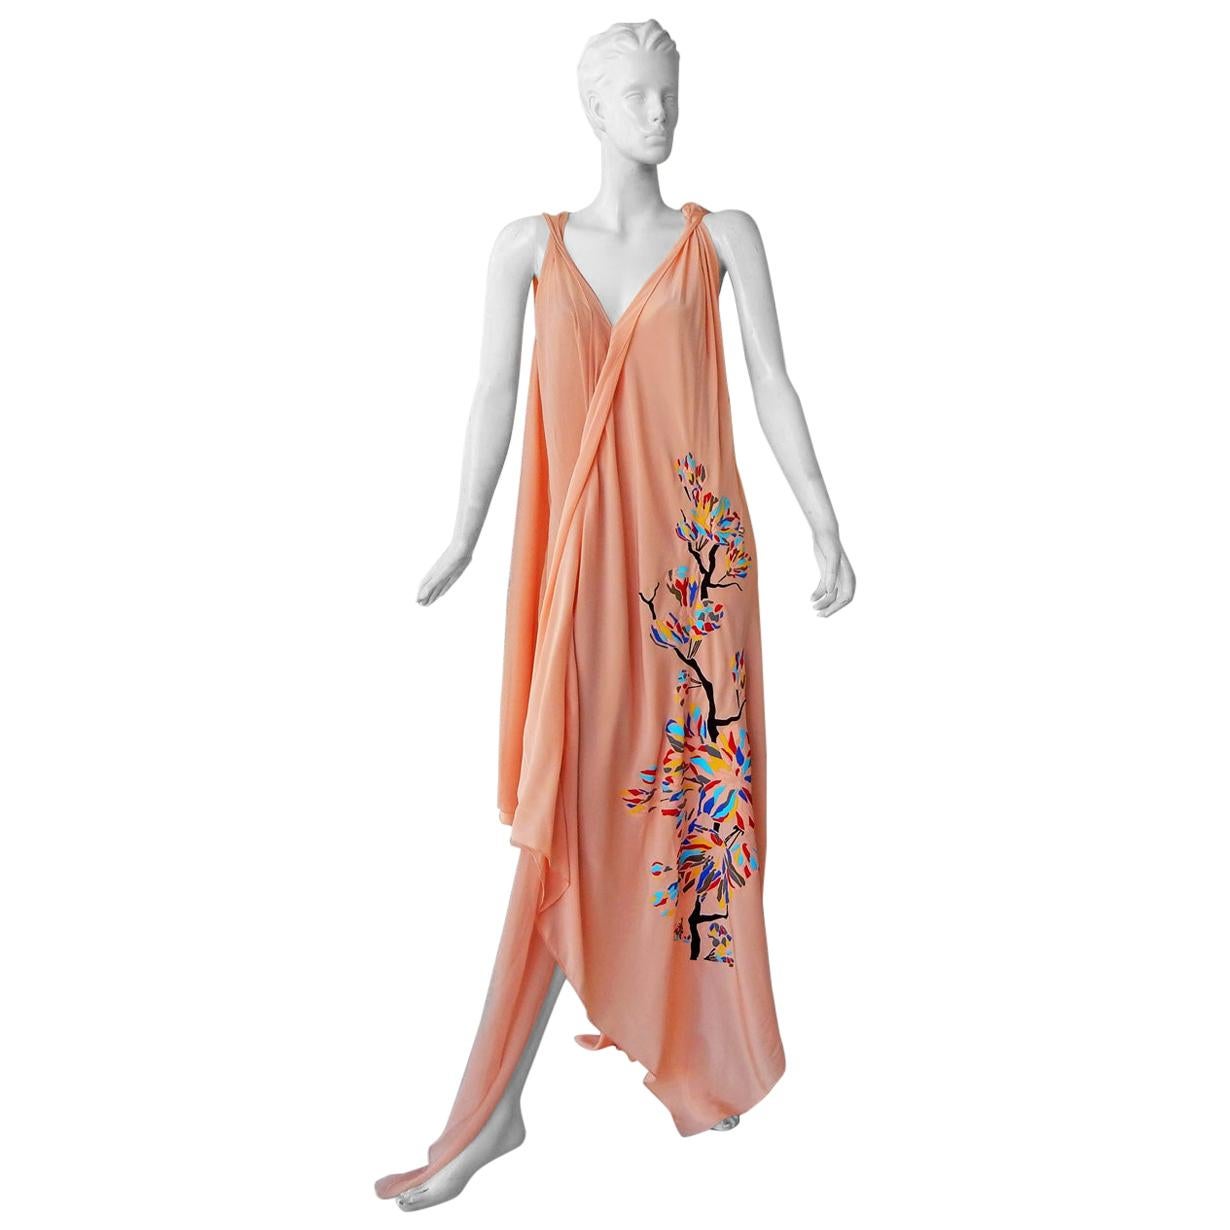 Vionnet "Dahlia" Flowing Silk Chiffon Embroidered Runway Caftan Dress Gown